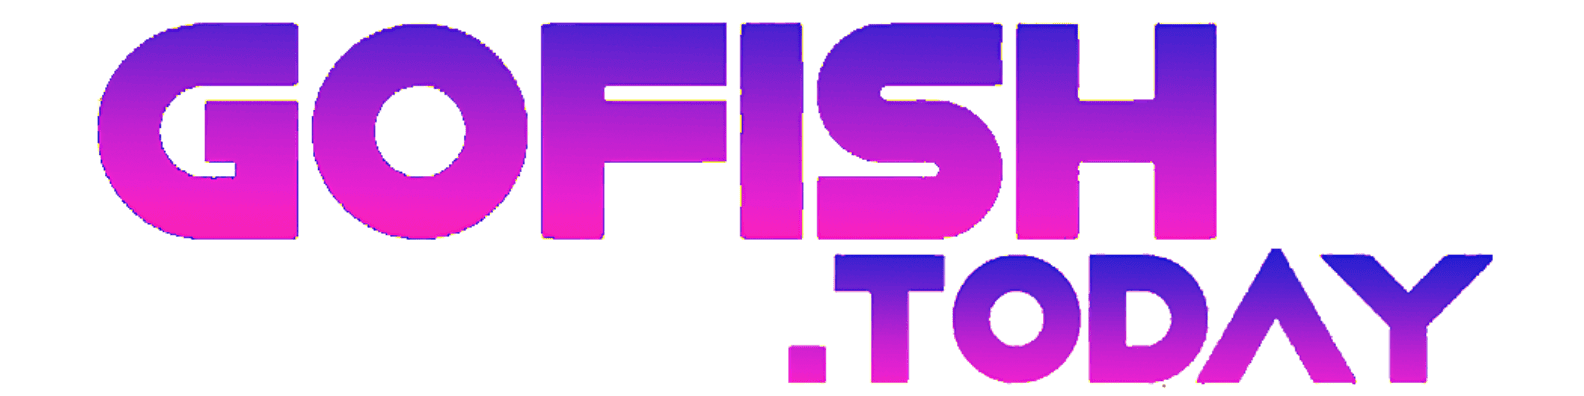 Fish Table Bonus Rewards Club Logo